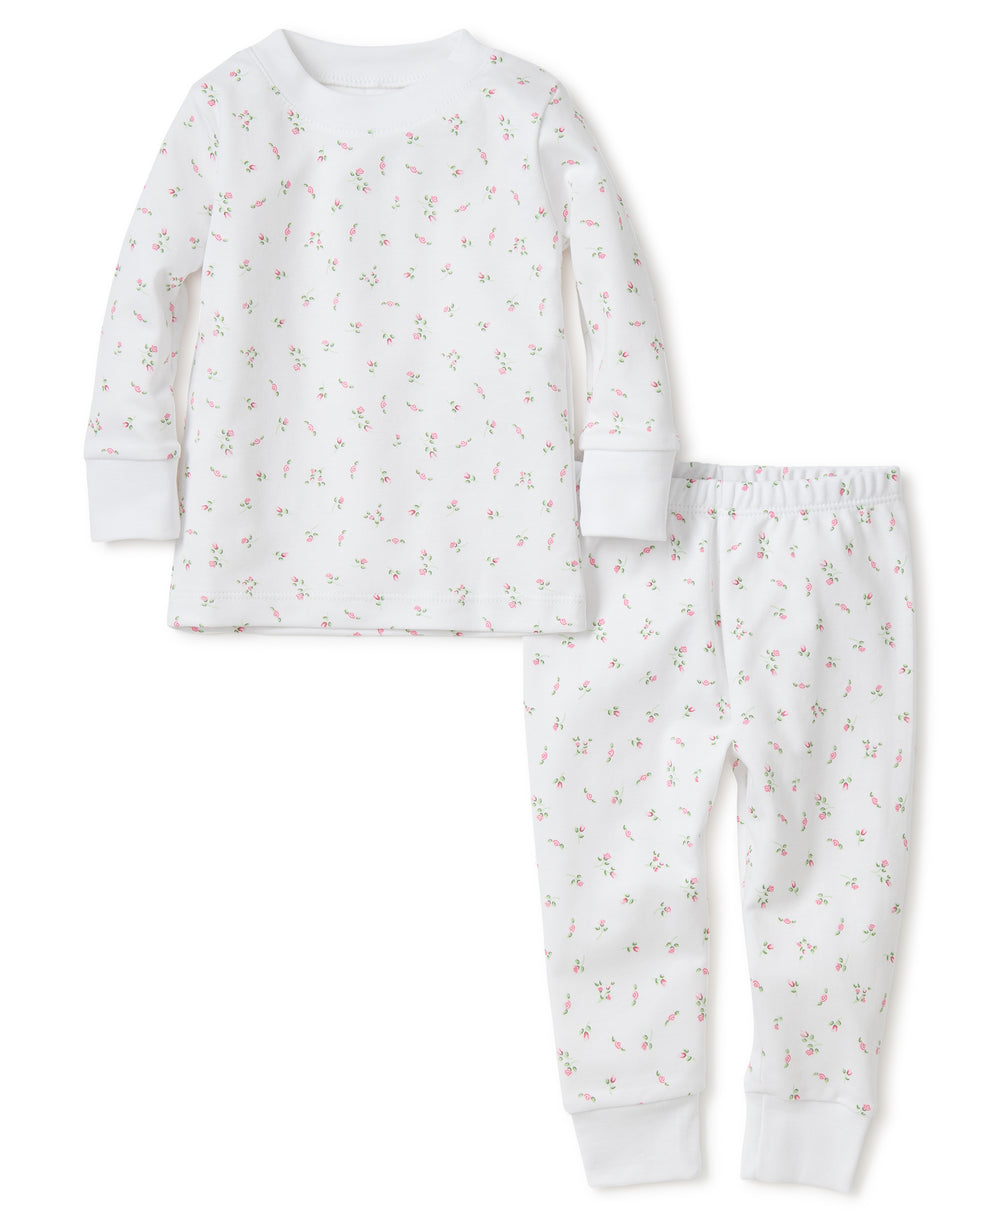 Kissy Kissy Garden Roses Snugfit Pajama Set in White